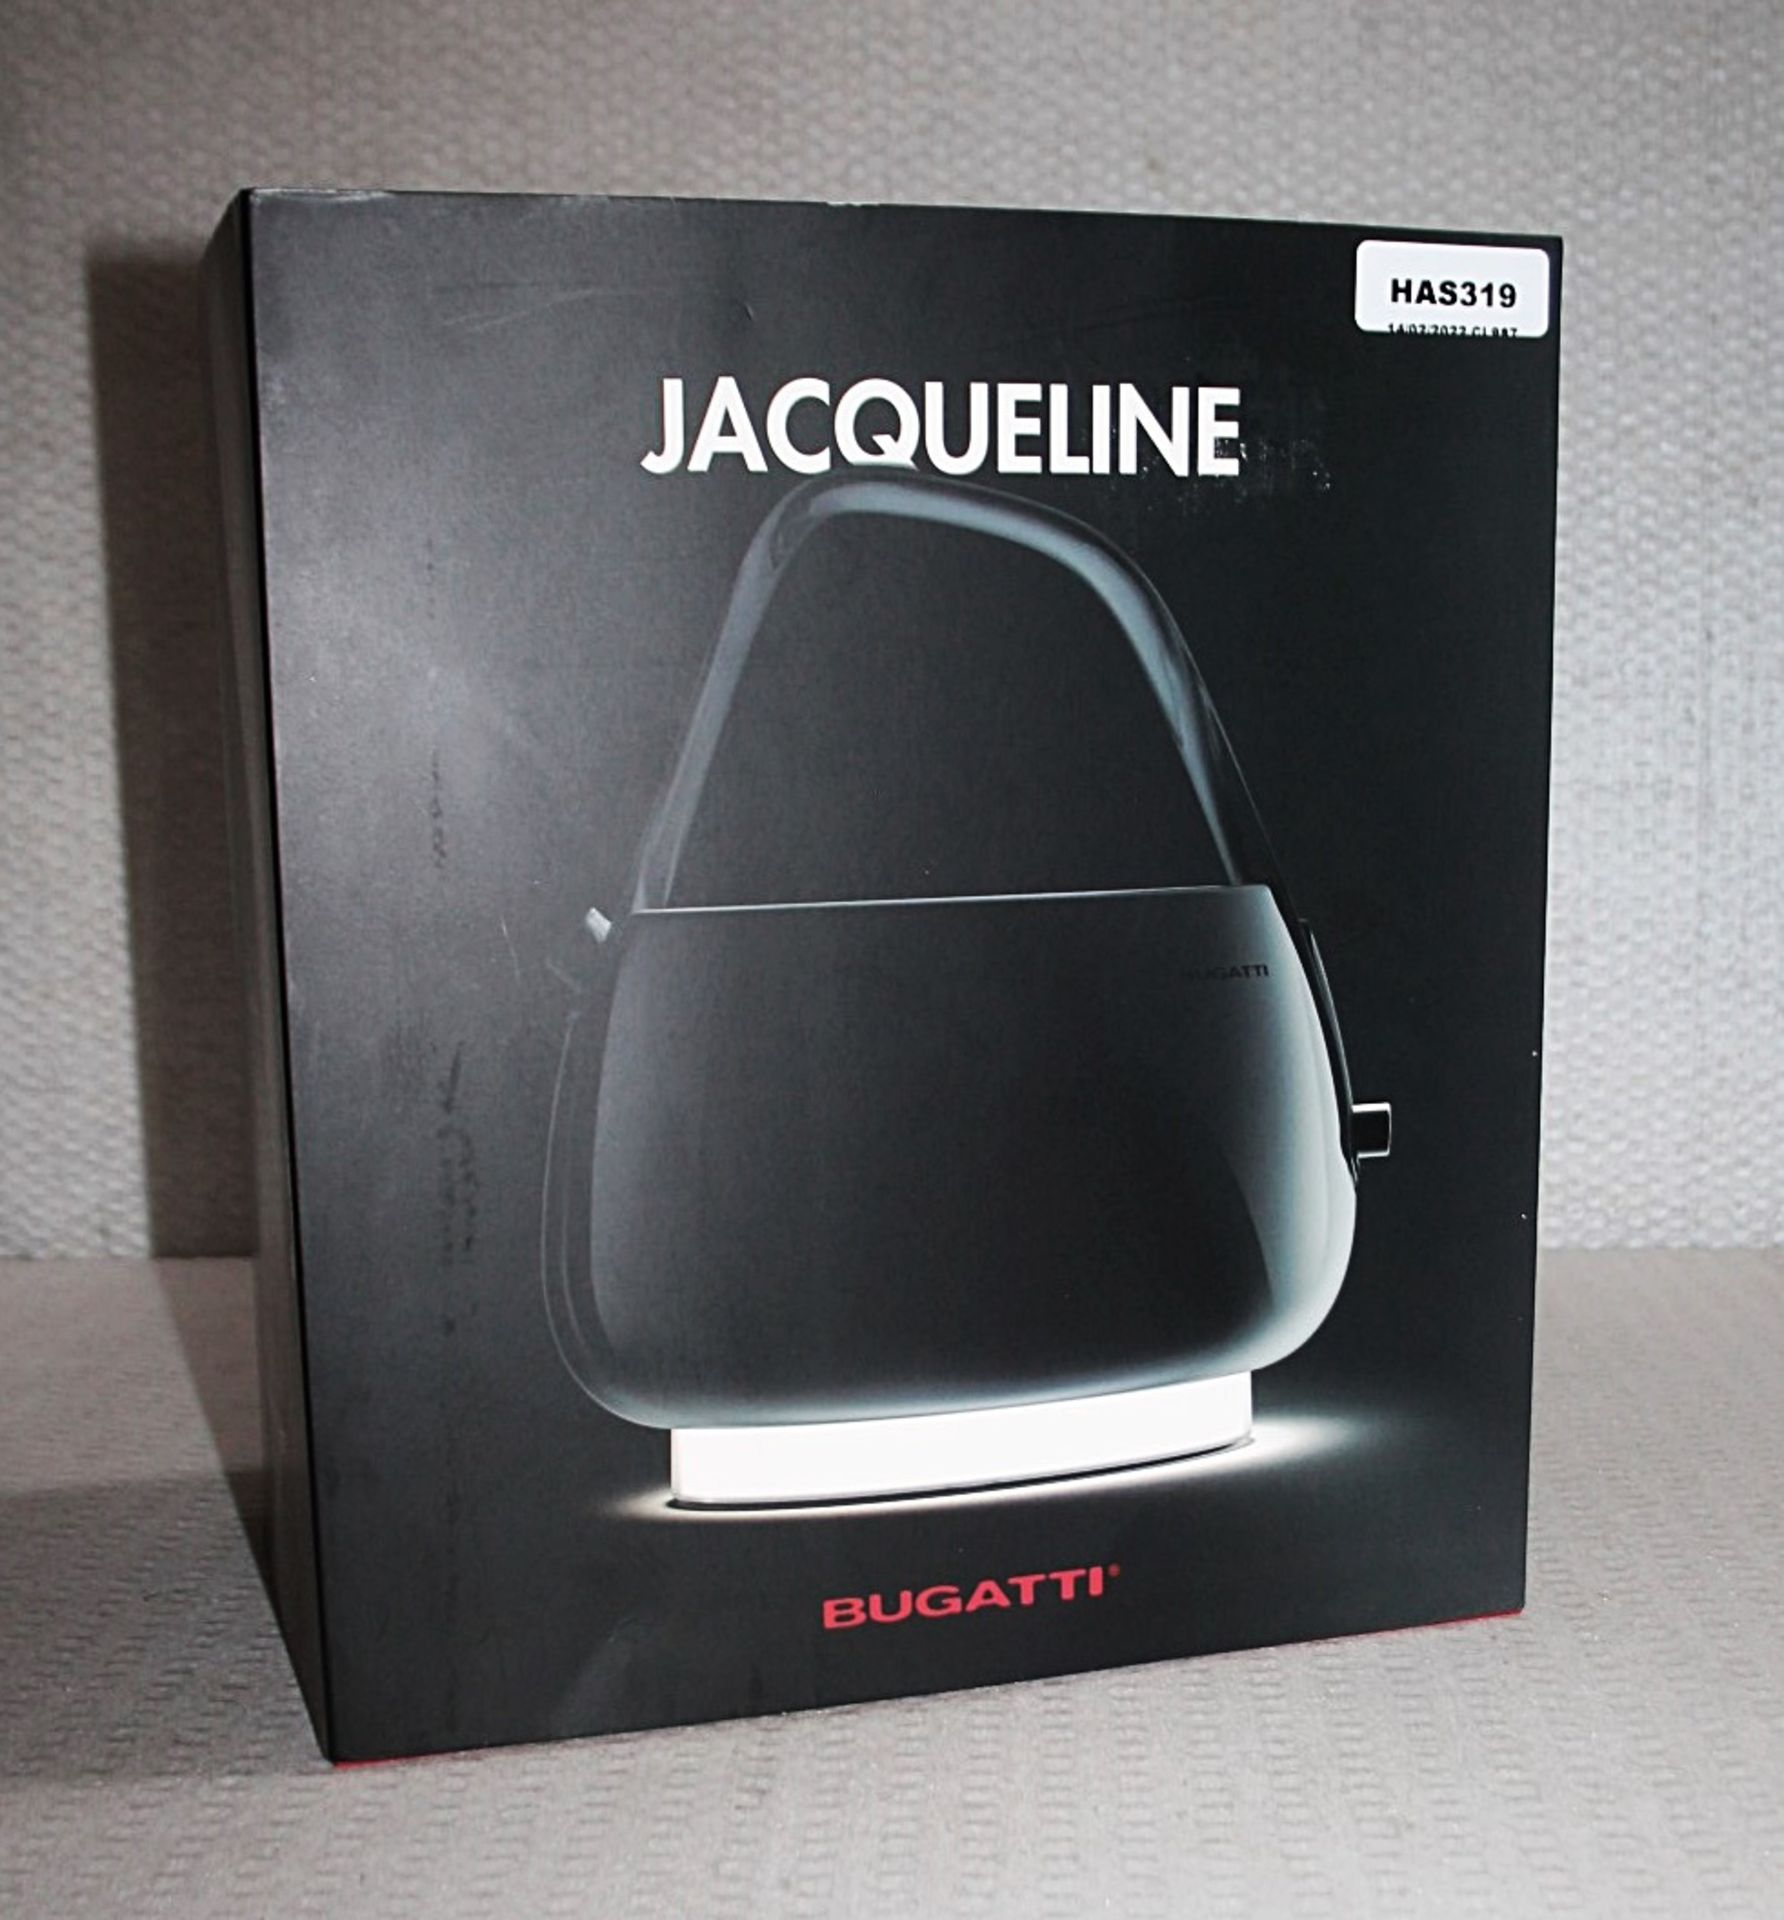 1 x BUGATTI Designer 'Jackie' Electric Kettle In Black - Original Price £279.00 - Boxed Stock - Image 12 of 15